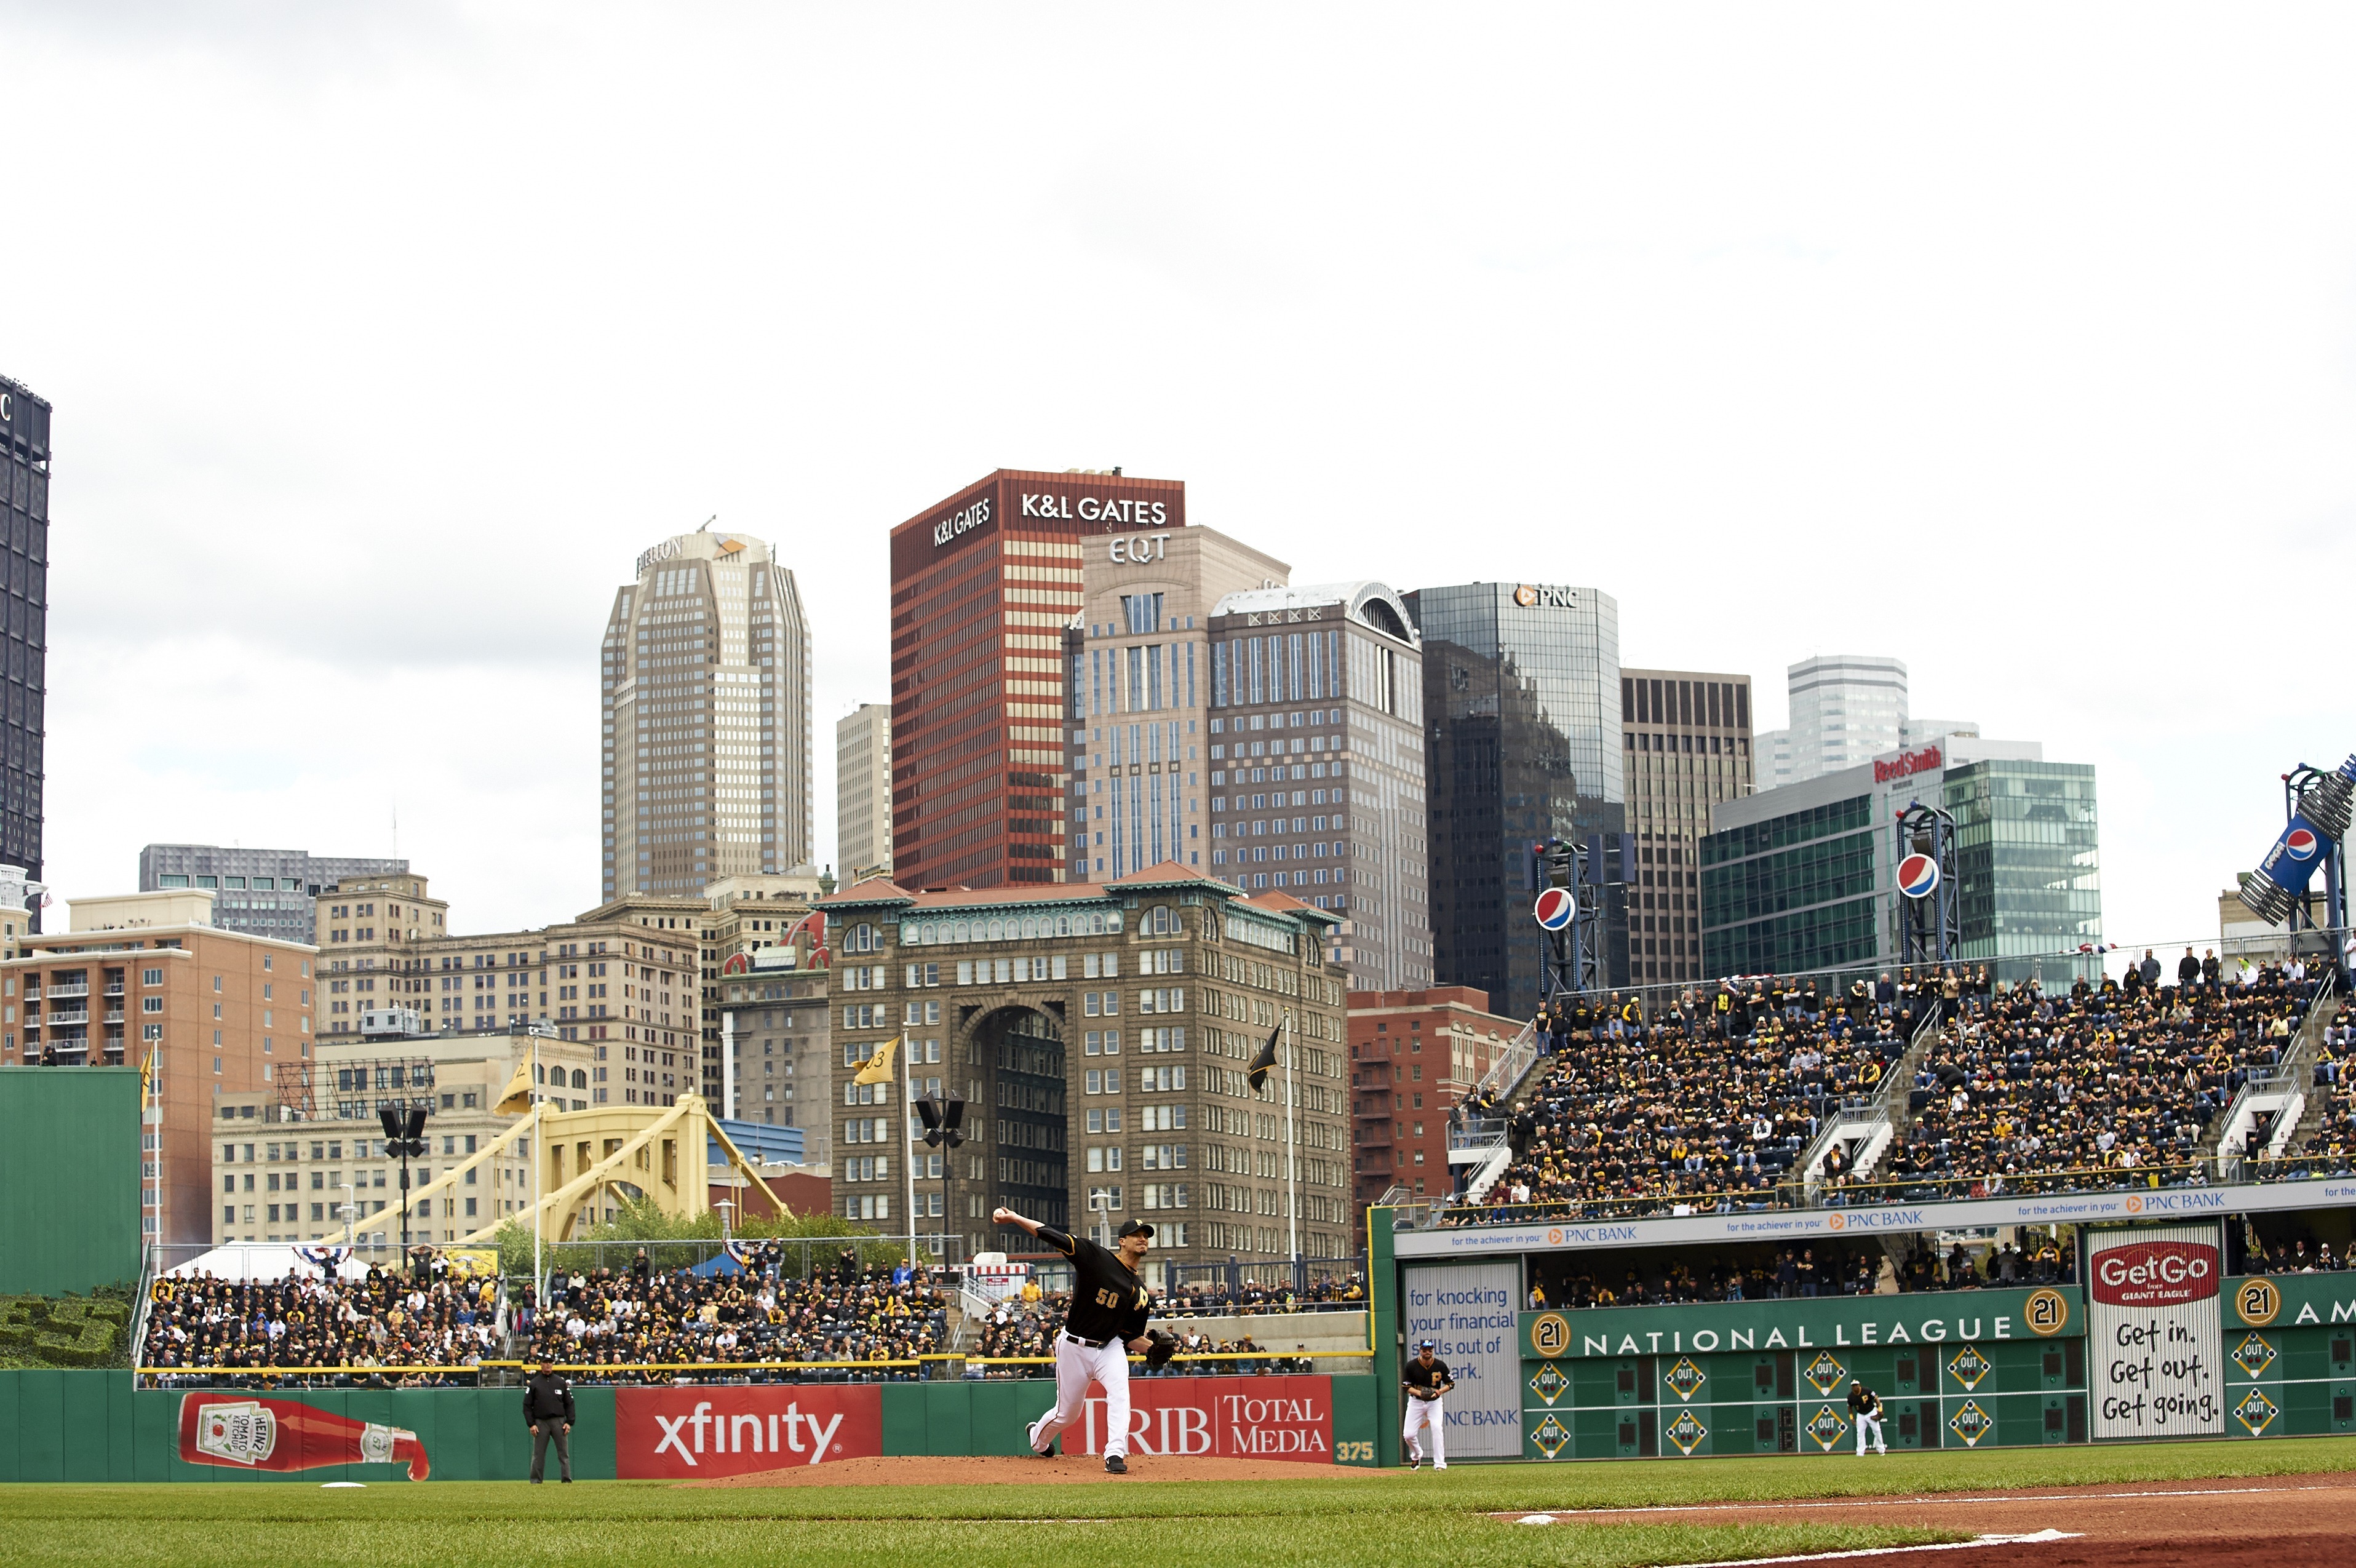 St. Louis Cardinals vs Pittsburgh Pirates, 2013 National League Division Series